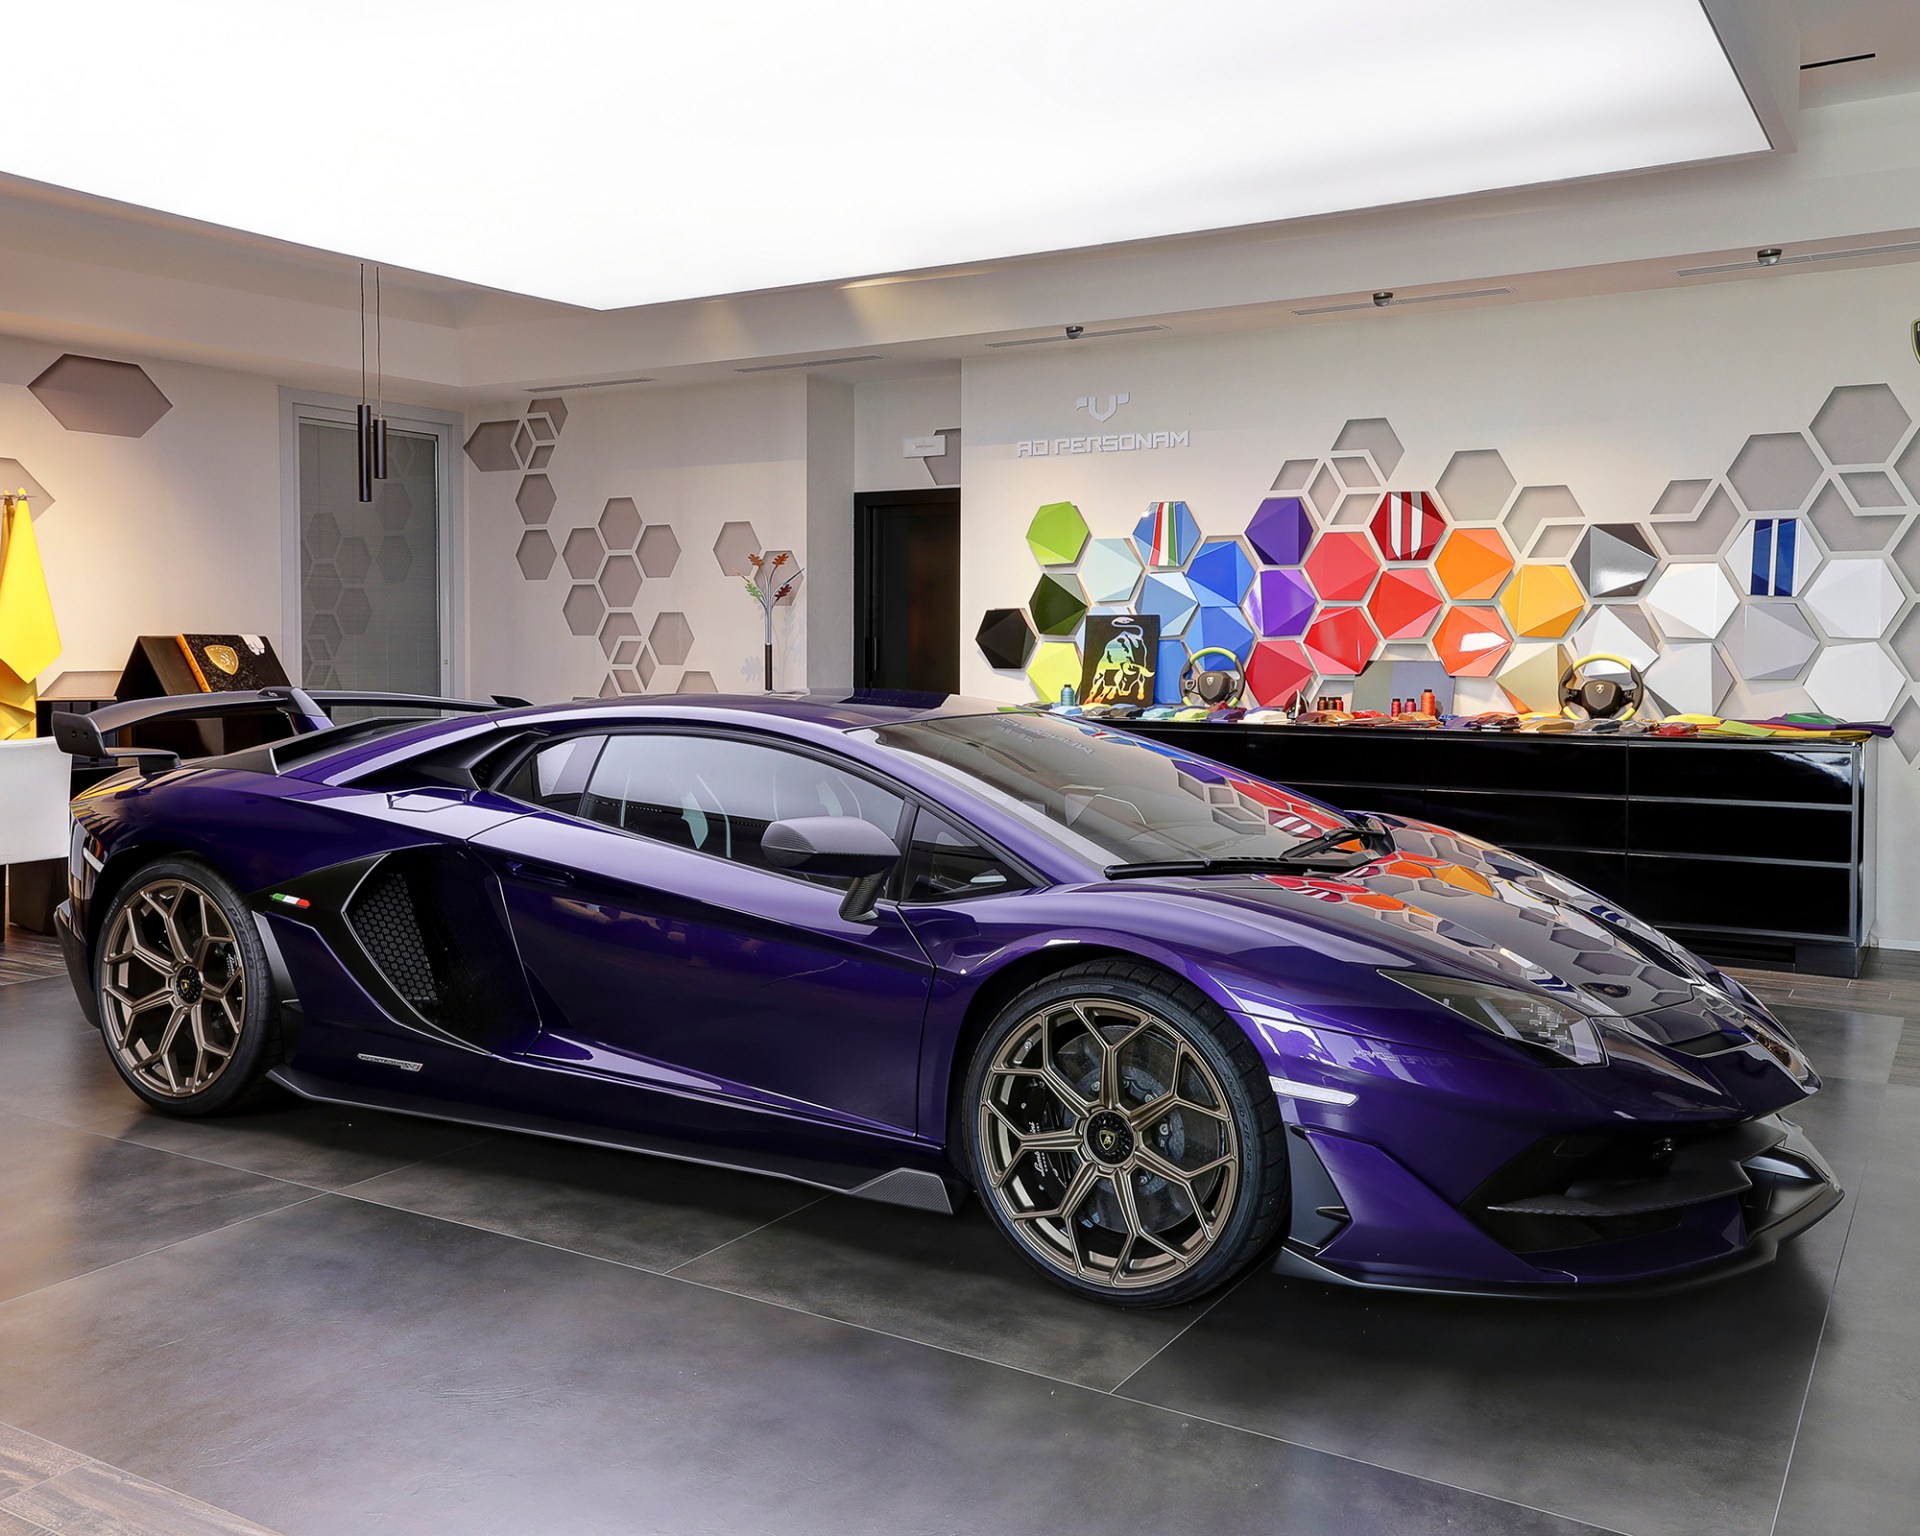 Lamborghini’s Ad Personam Program allows for endless custom options